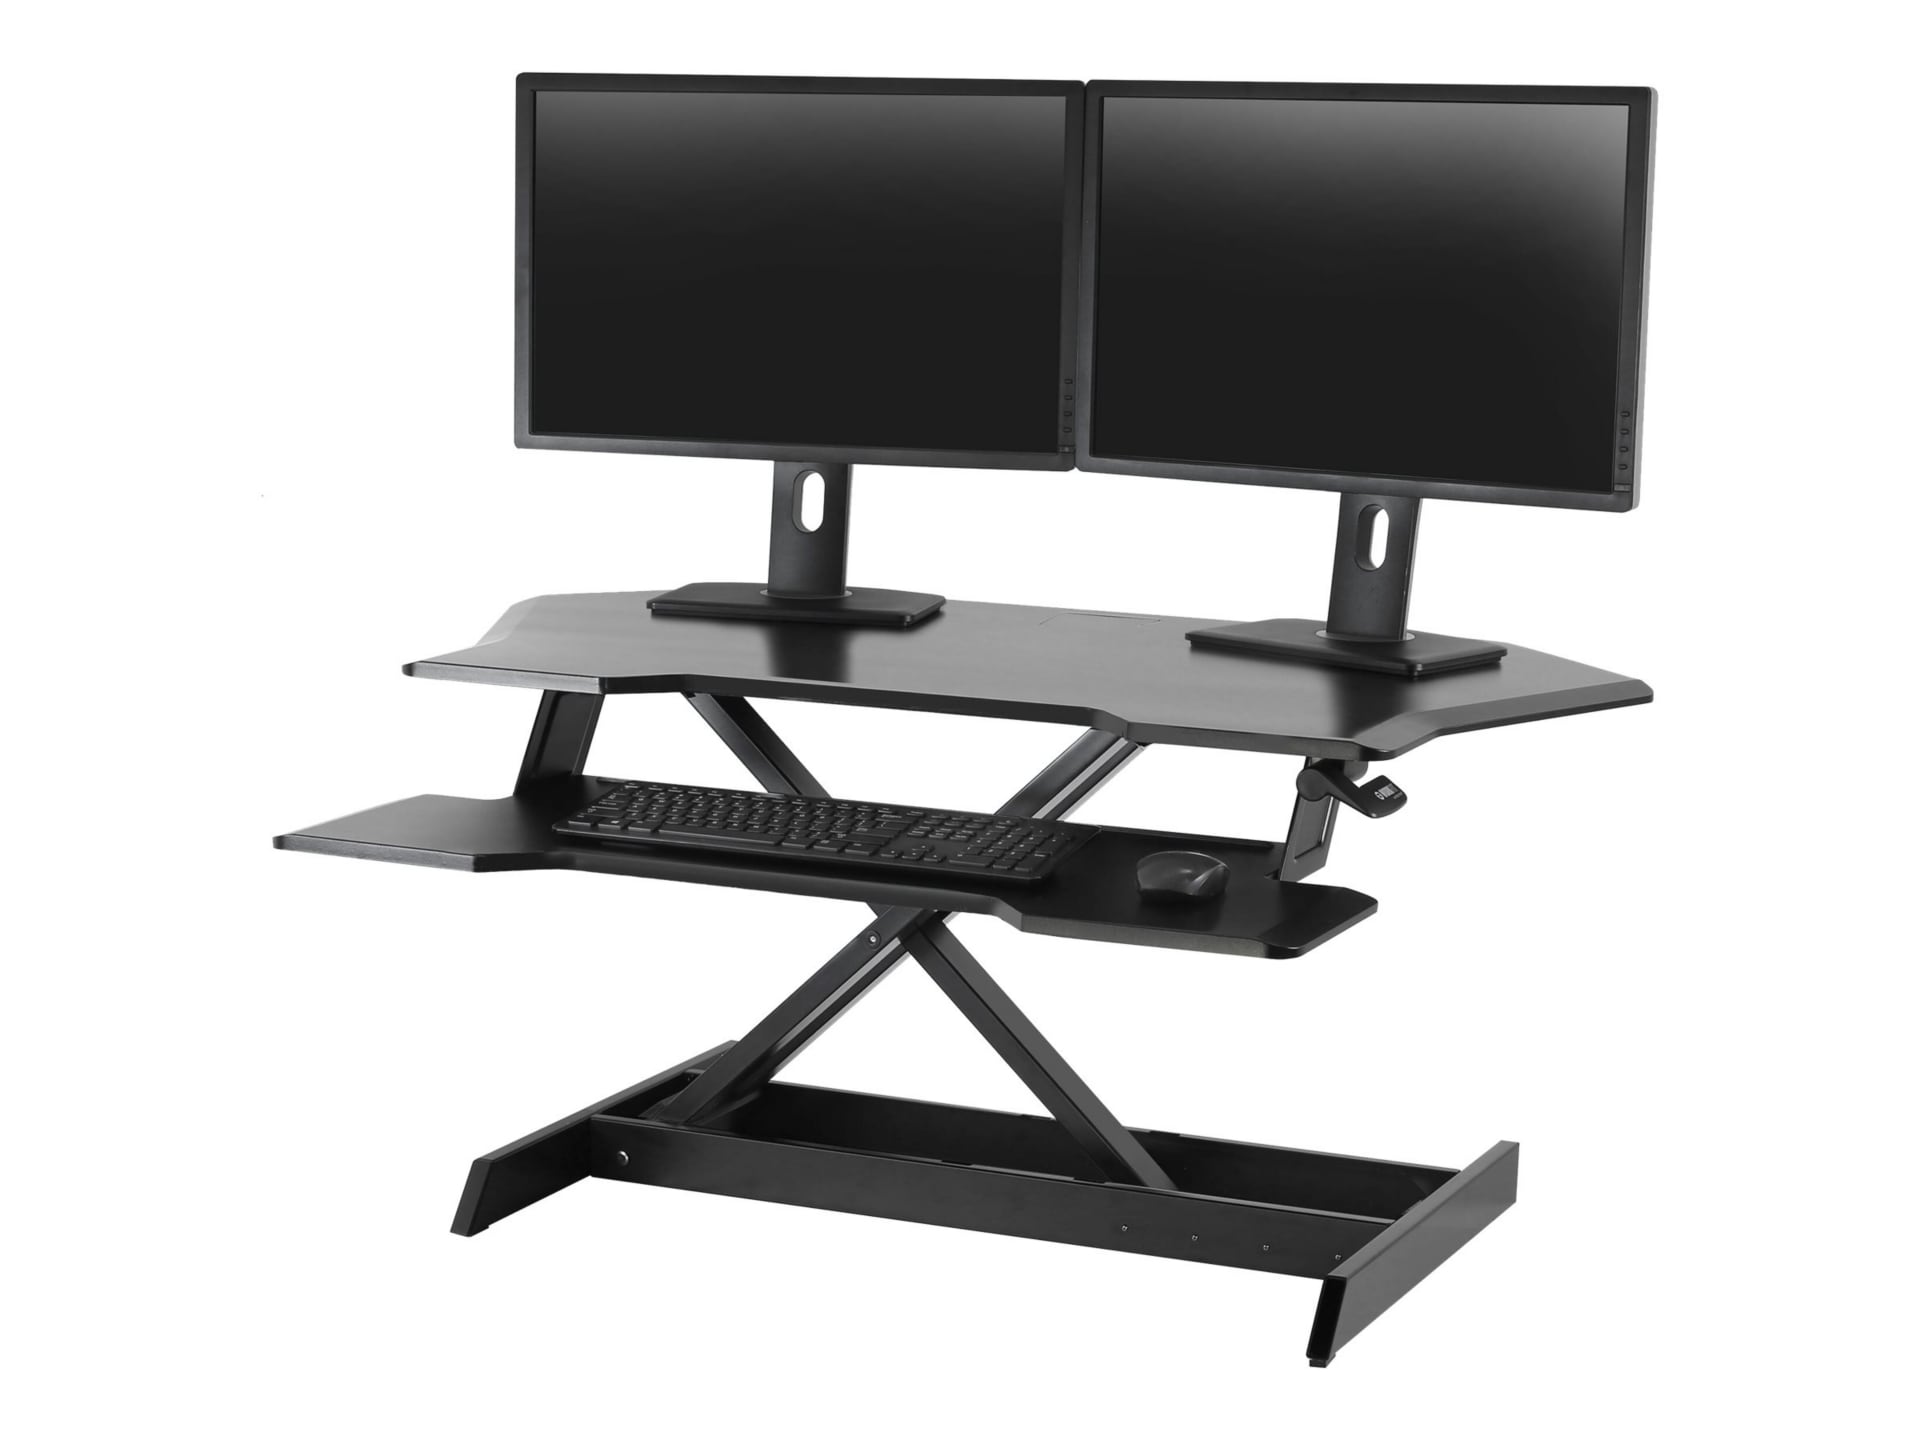 Ergotron WorkFit Corner - standing desk converter - black